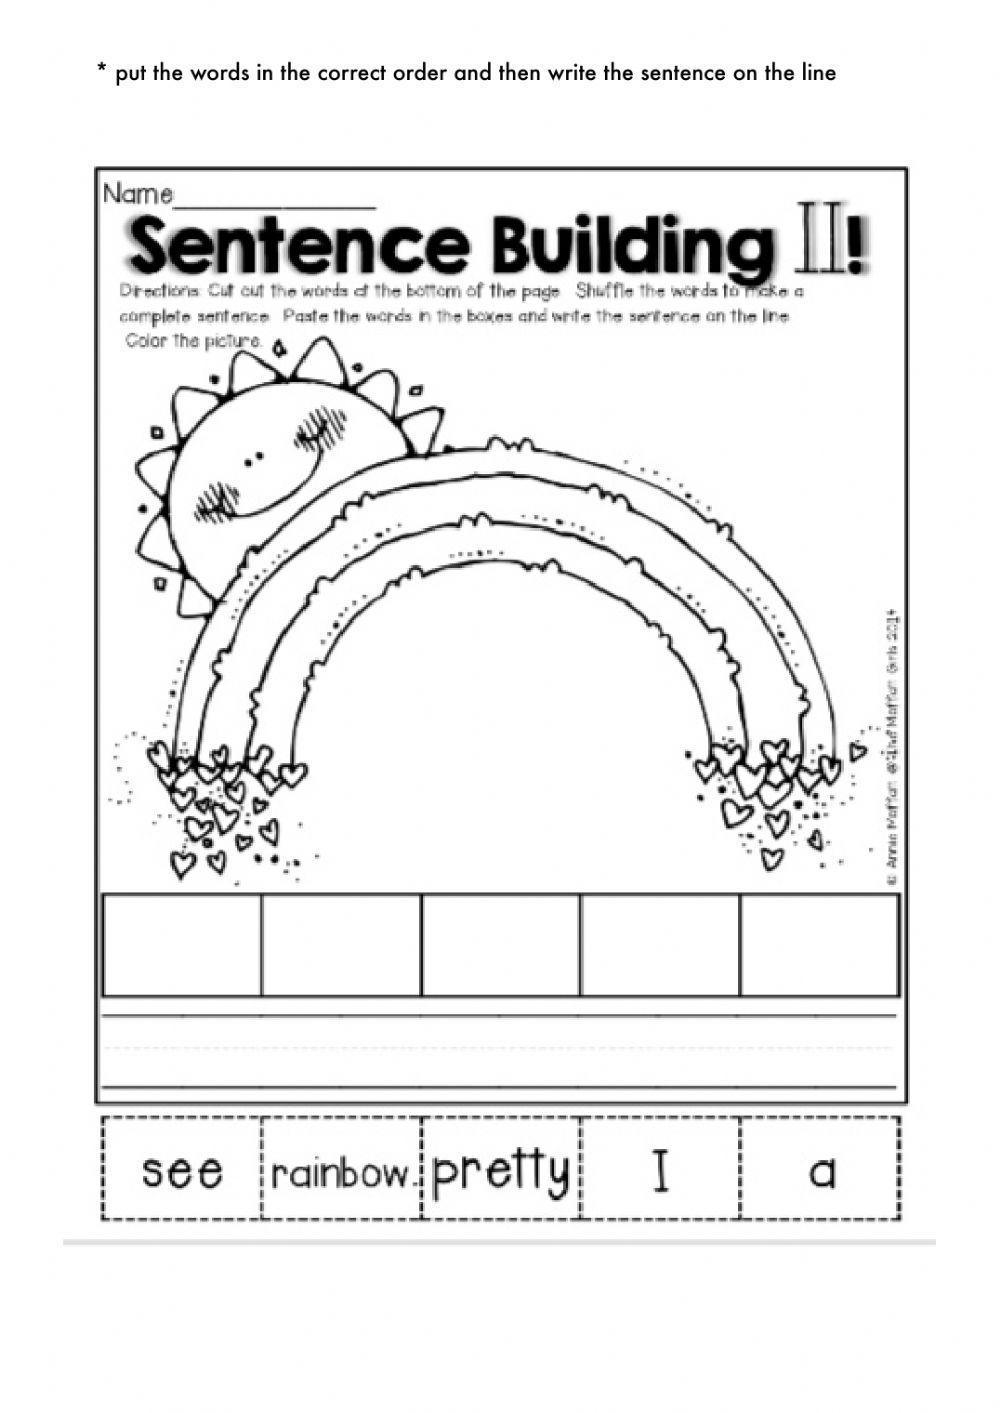 Sentence building 2